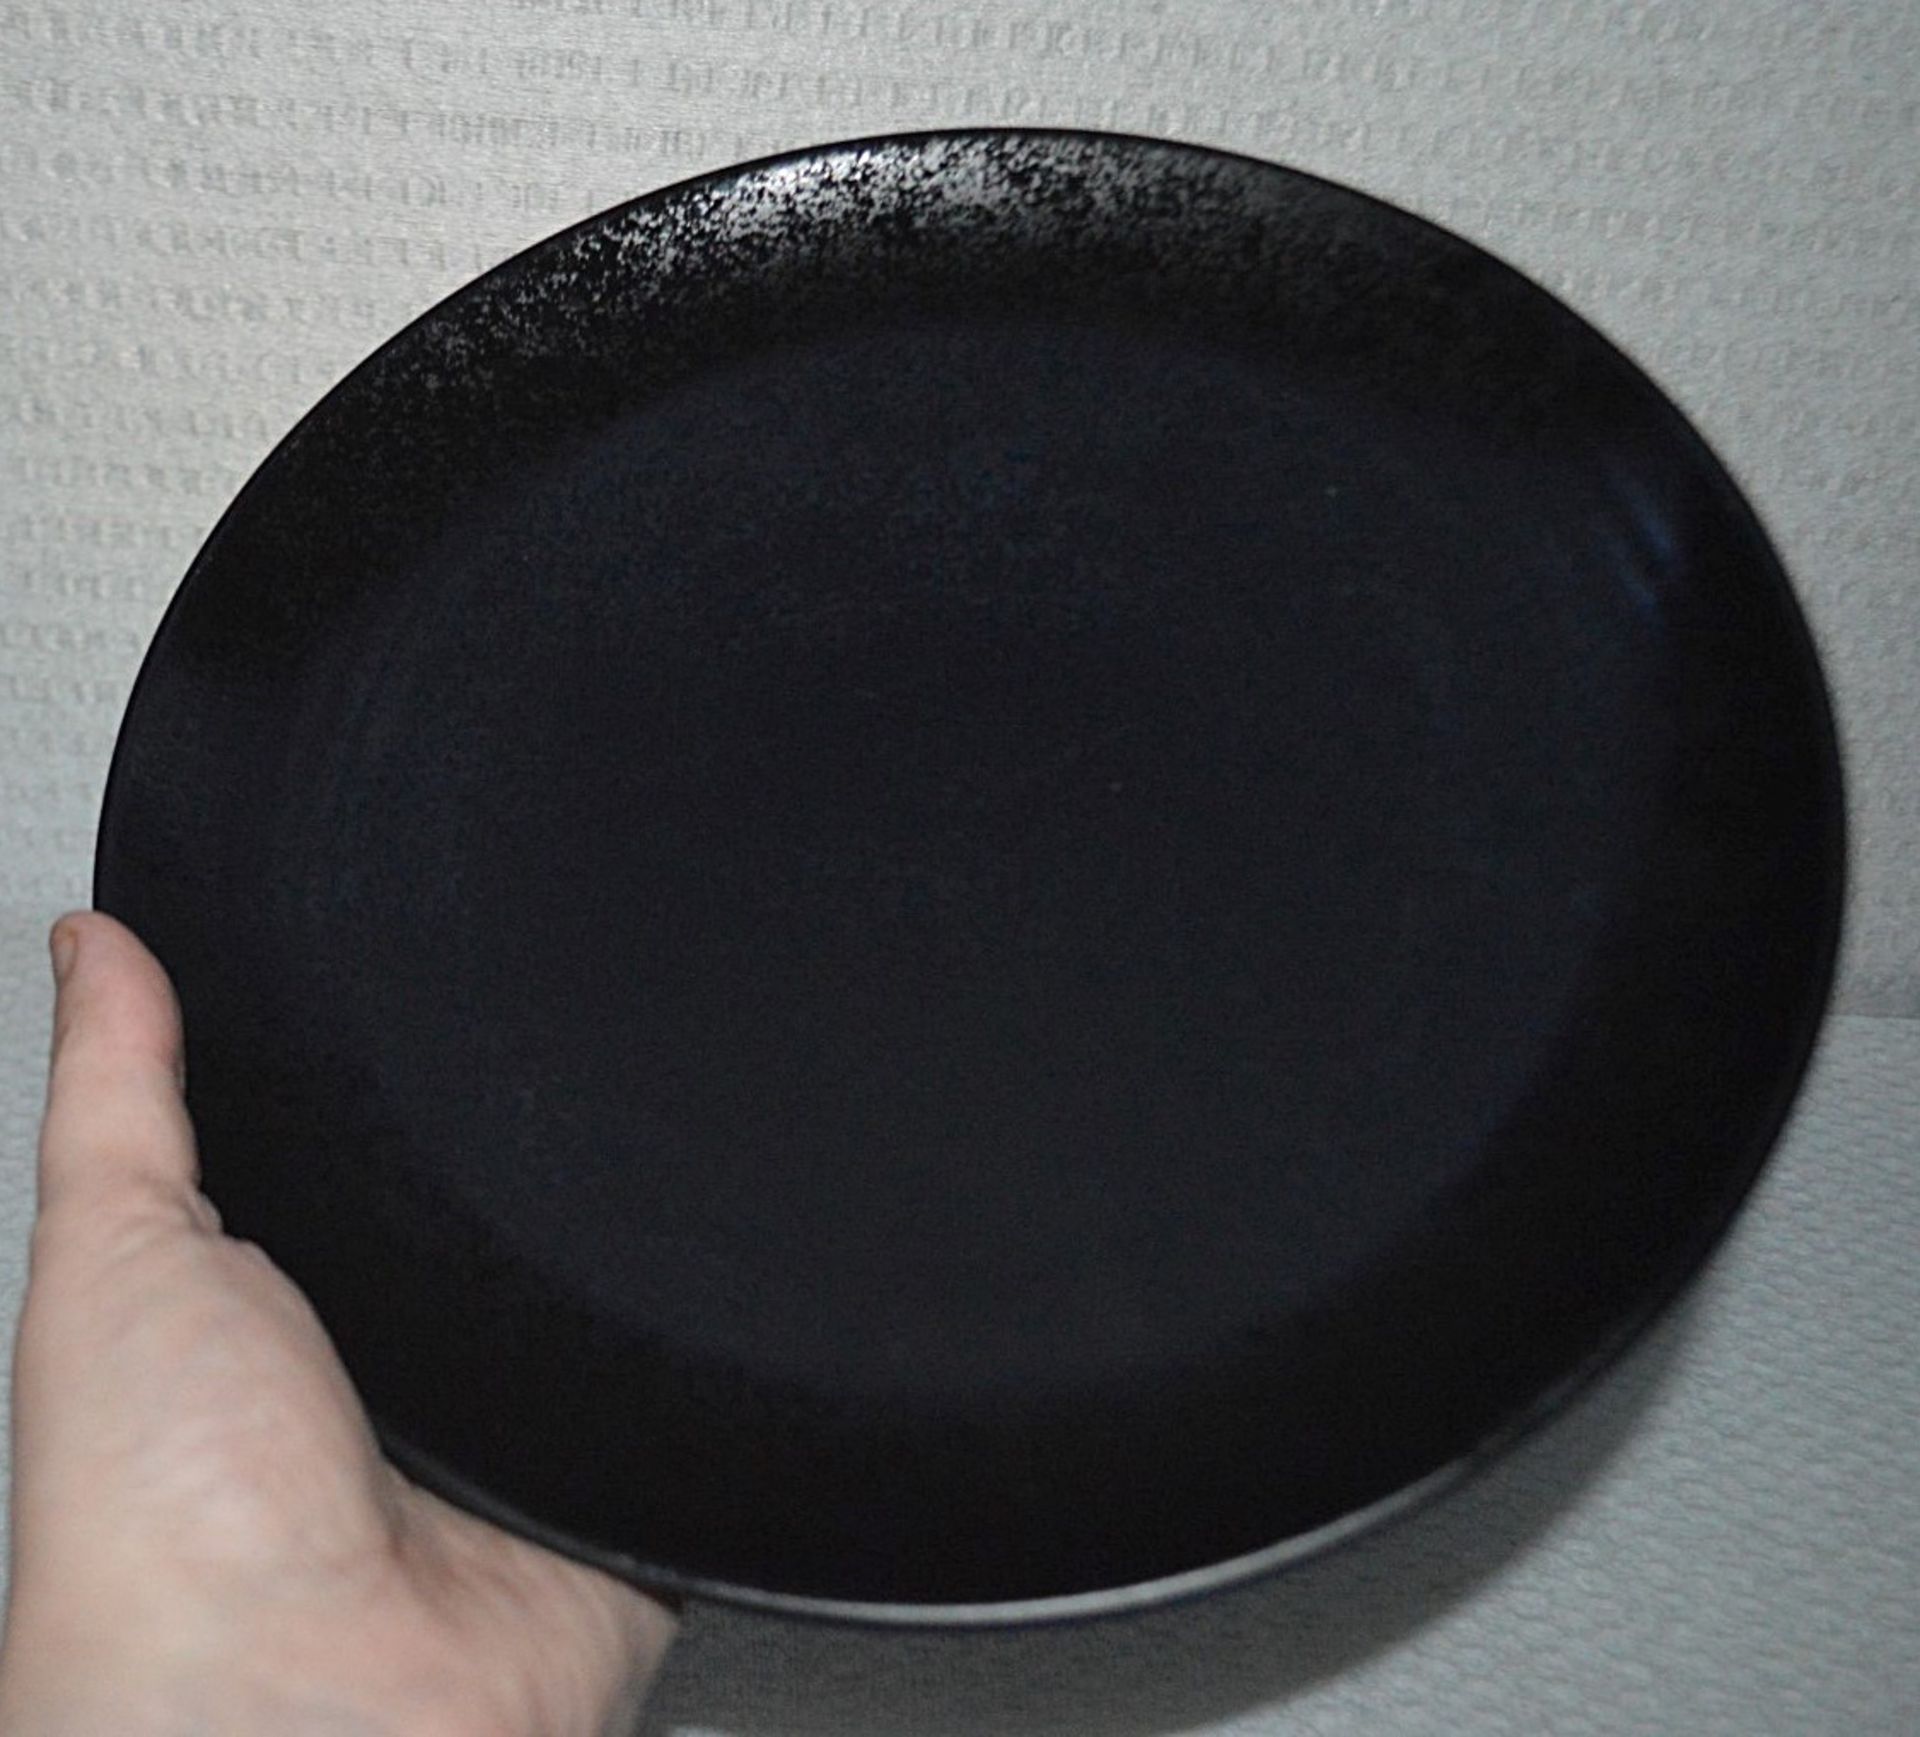 30 x RAK Porcelain 'Karbon' Black Round Flat Porcelain Plates - 26.5cm In Diameter - Image 4 of 5